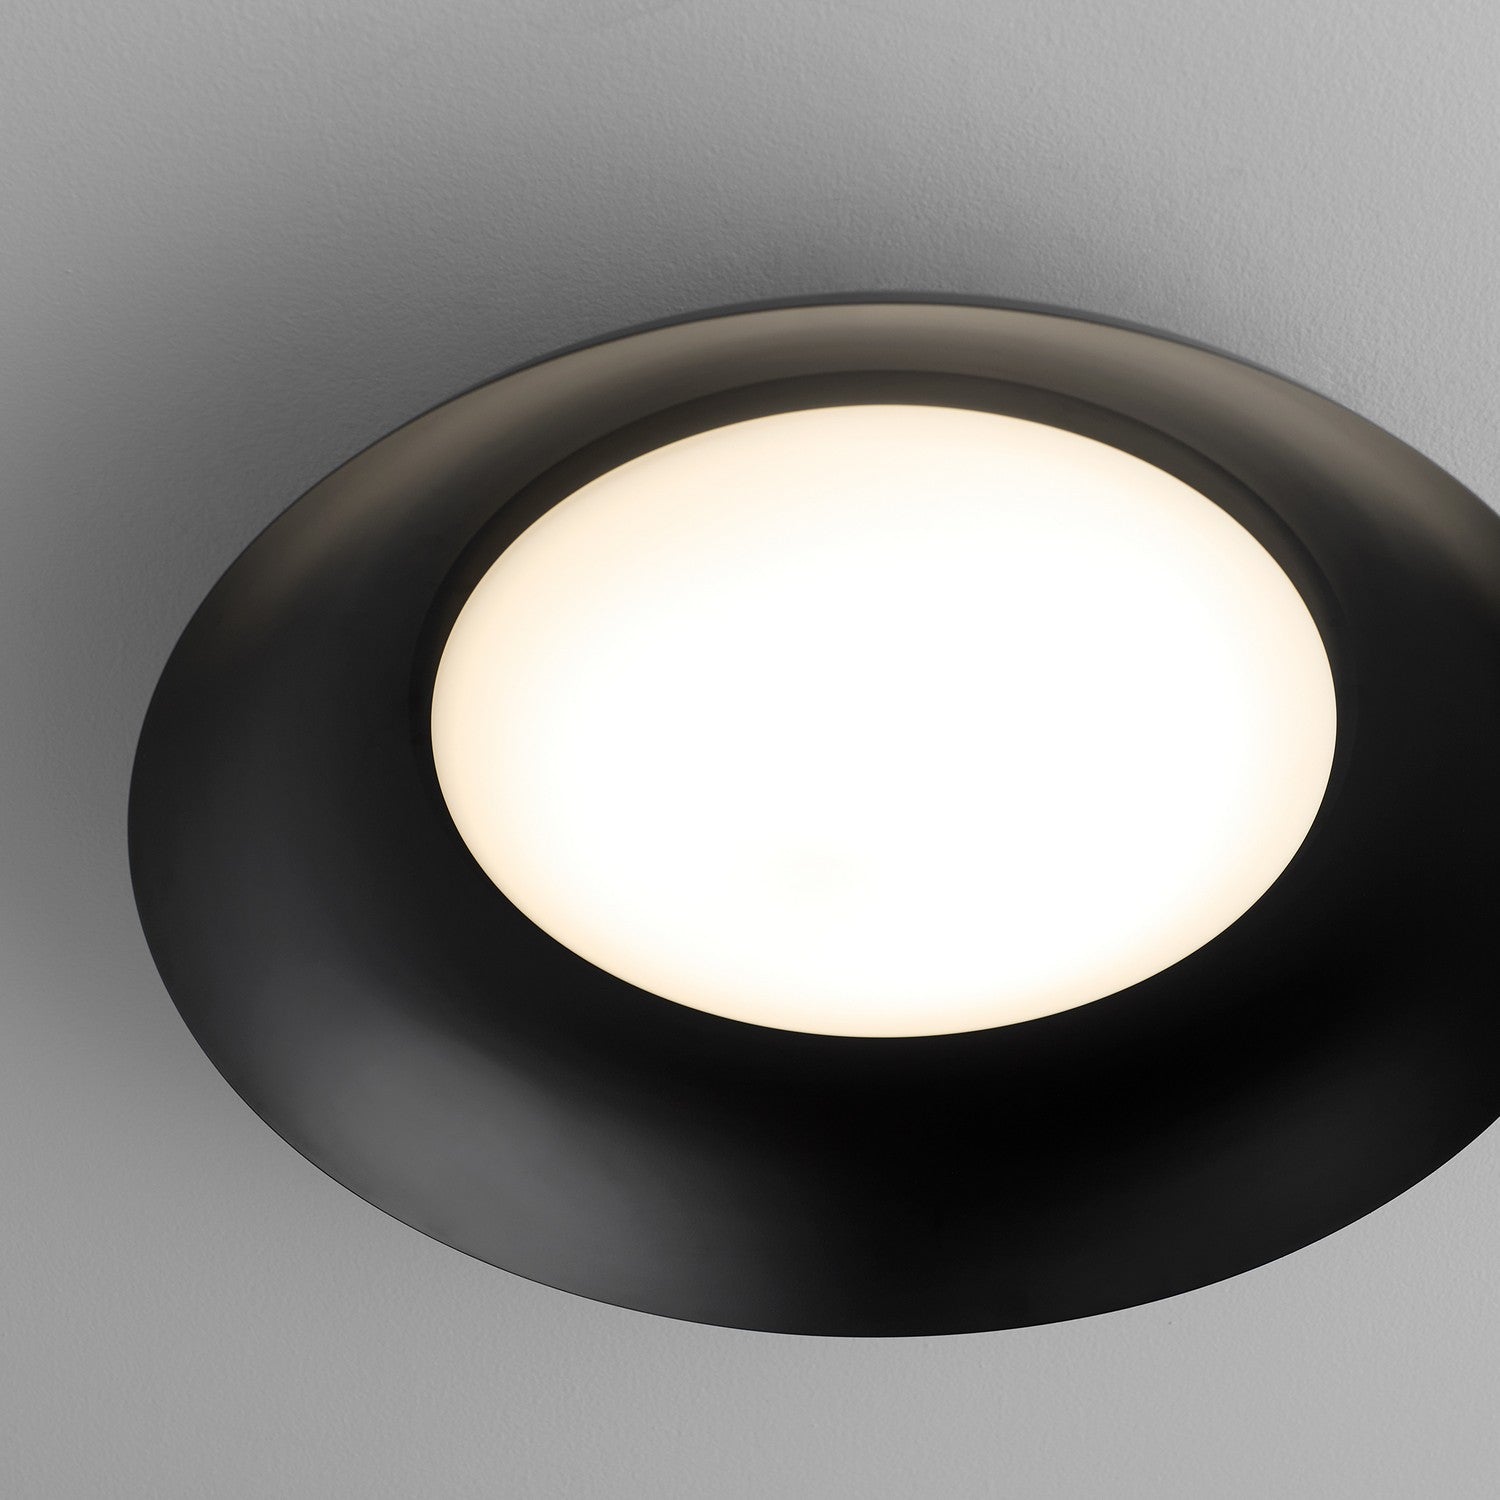 Oxygen Bongo 3-679-15 Flush Ceiling Light Fixture - Black